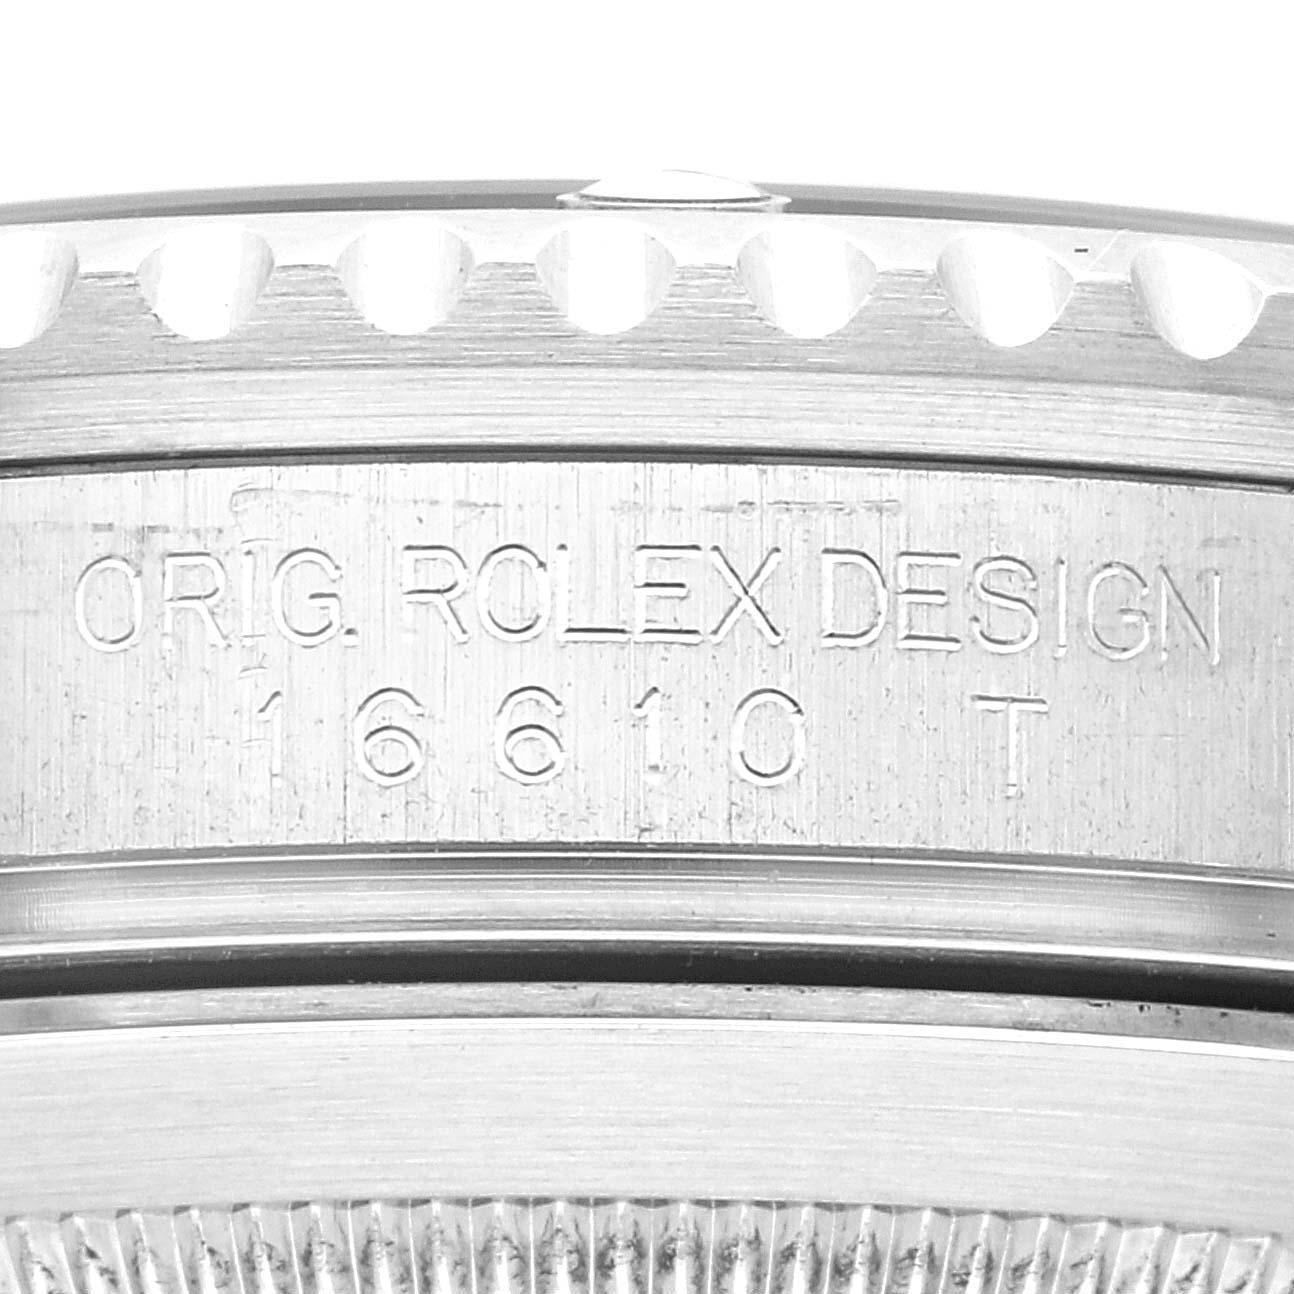 Rolex Submariner Date Black Dial Steel Mens Watch 16610 4